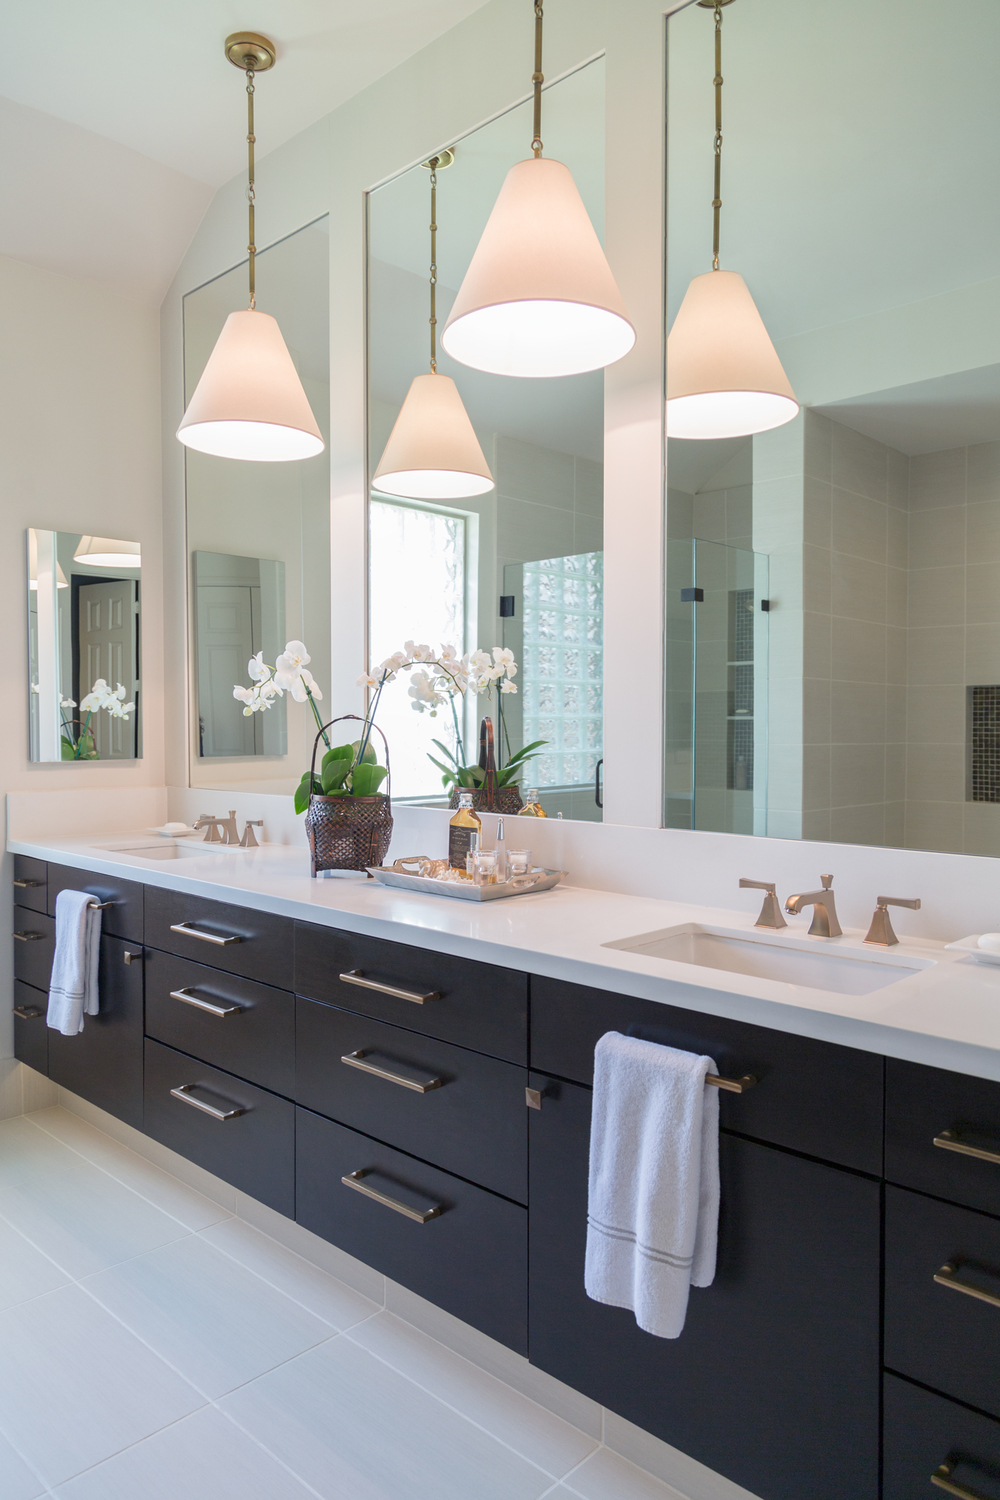 A Beautiful Alternative For Lighting In, How Low Should Pendant Lights Hang Over Bathroom Vanity